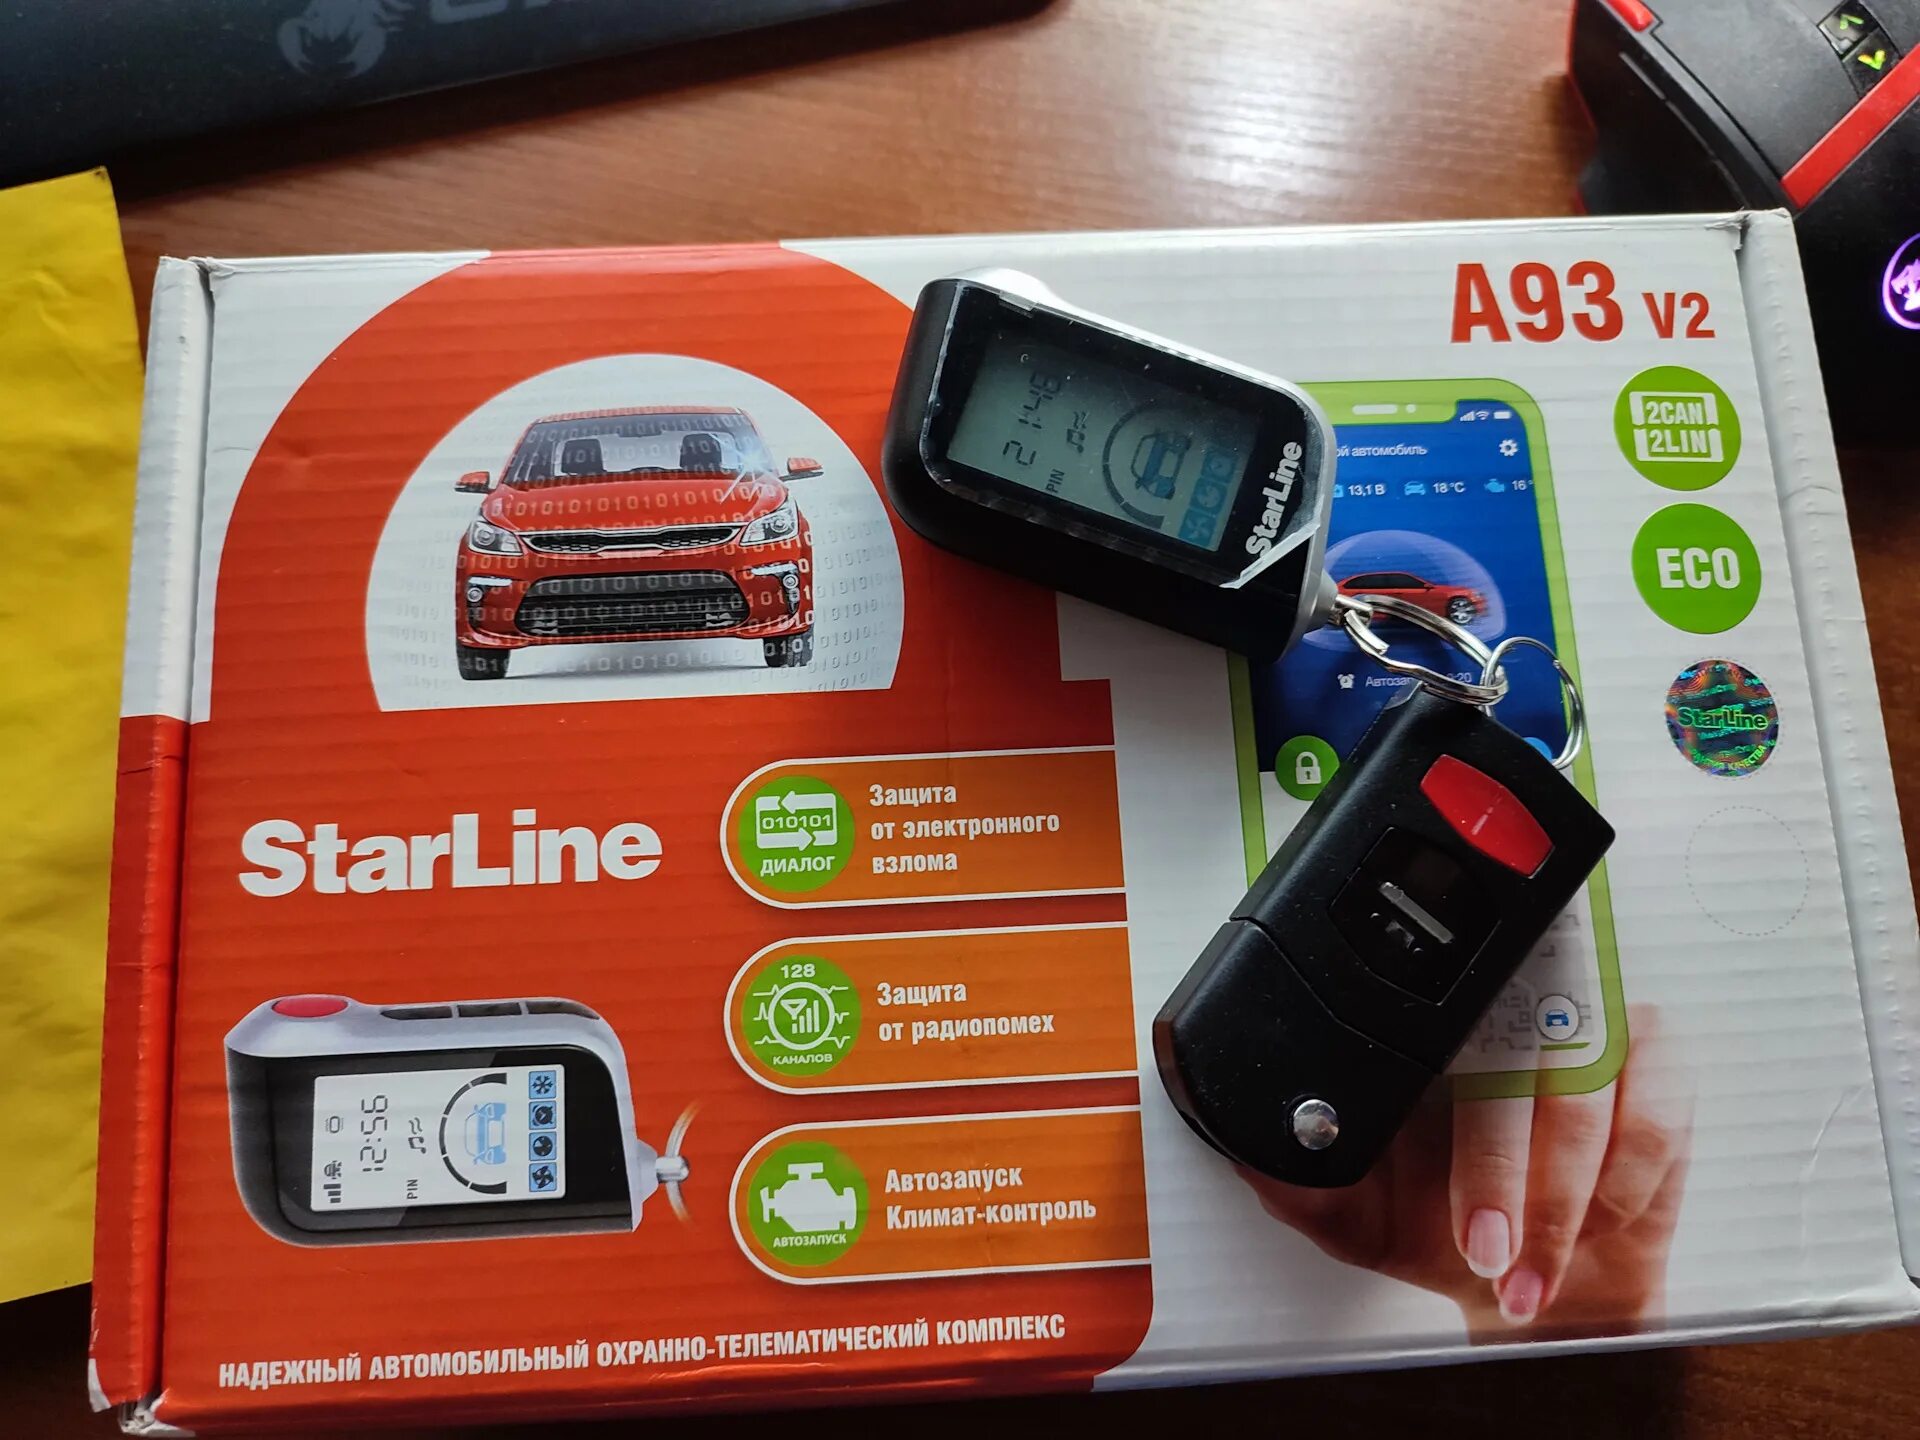 Старлайн а93 купить. Сигнализация с автозапуском STARLINE a93. Автосигнализация STARLINE a93 v2 2can+2lin GSM Eco. STARLINE a93 Eco. Комплектация сигнализации старлайн а93 с автозапуском.